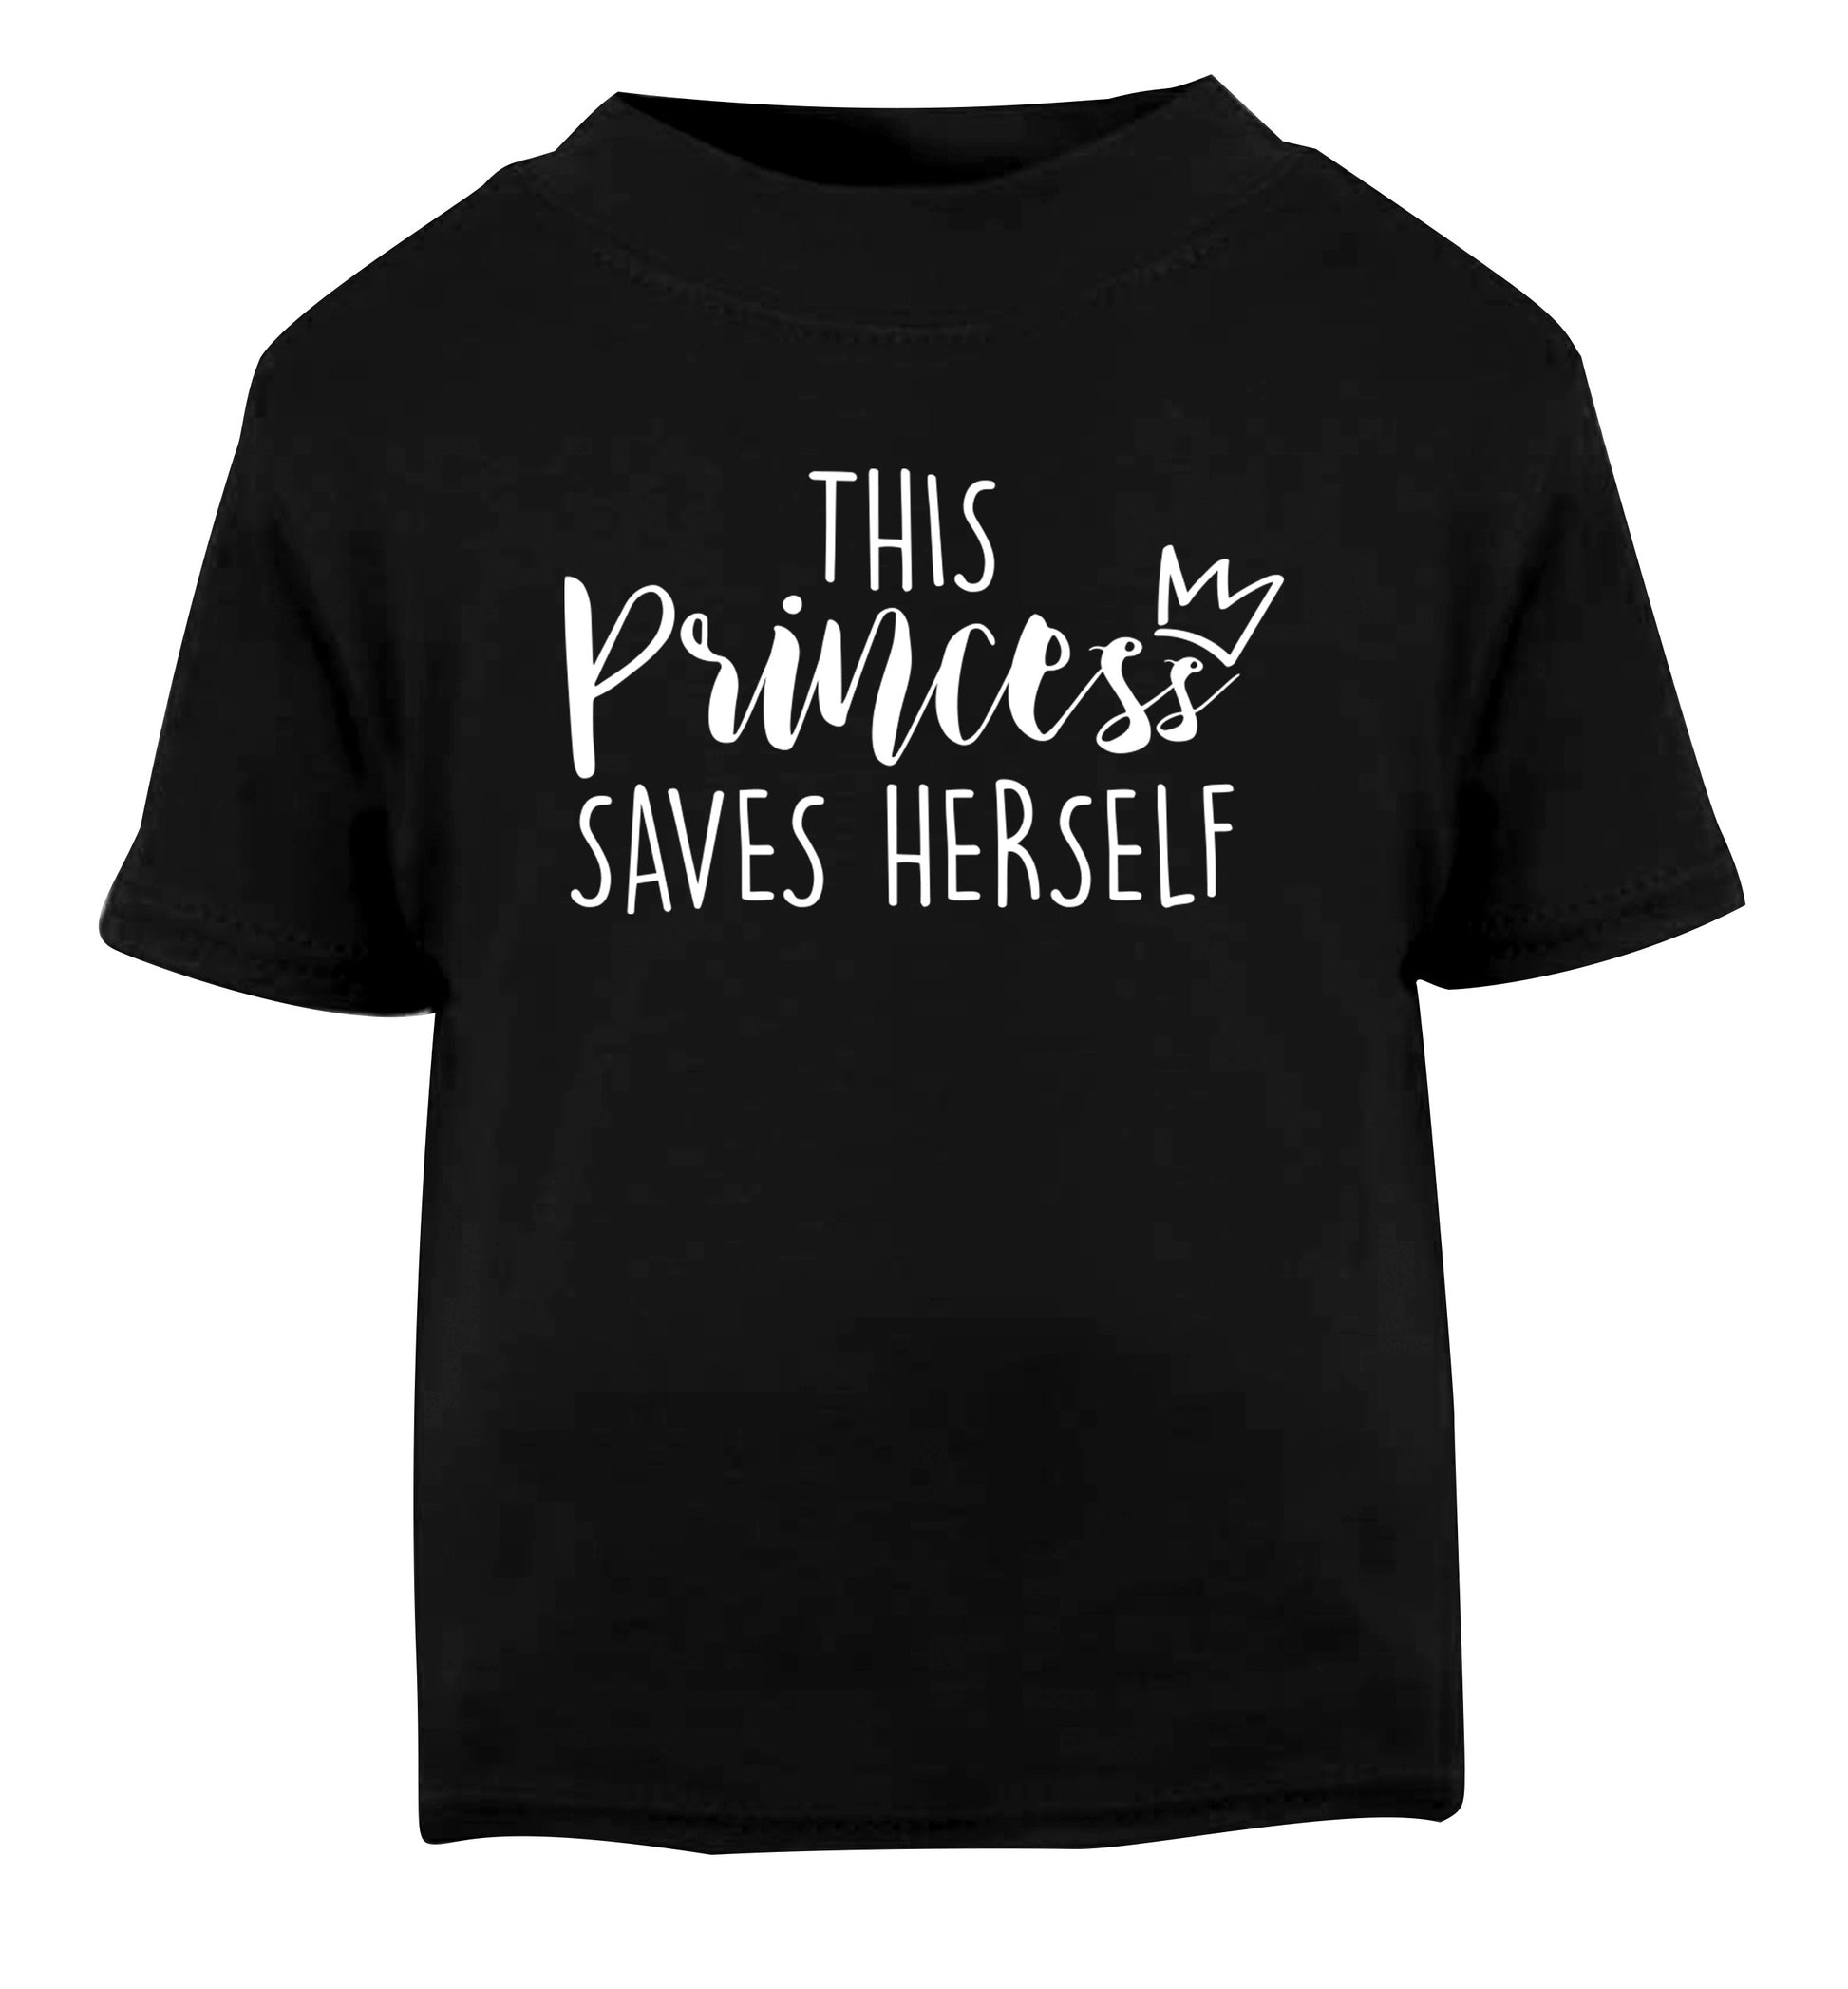 This princess saves herself Black Baby Toddler Tshirt 2 years